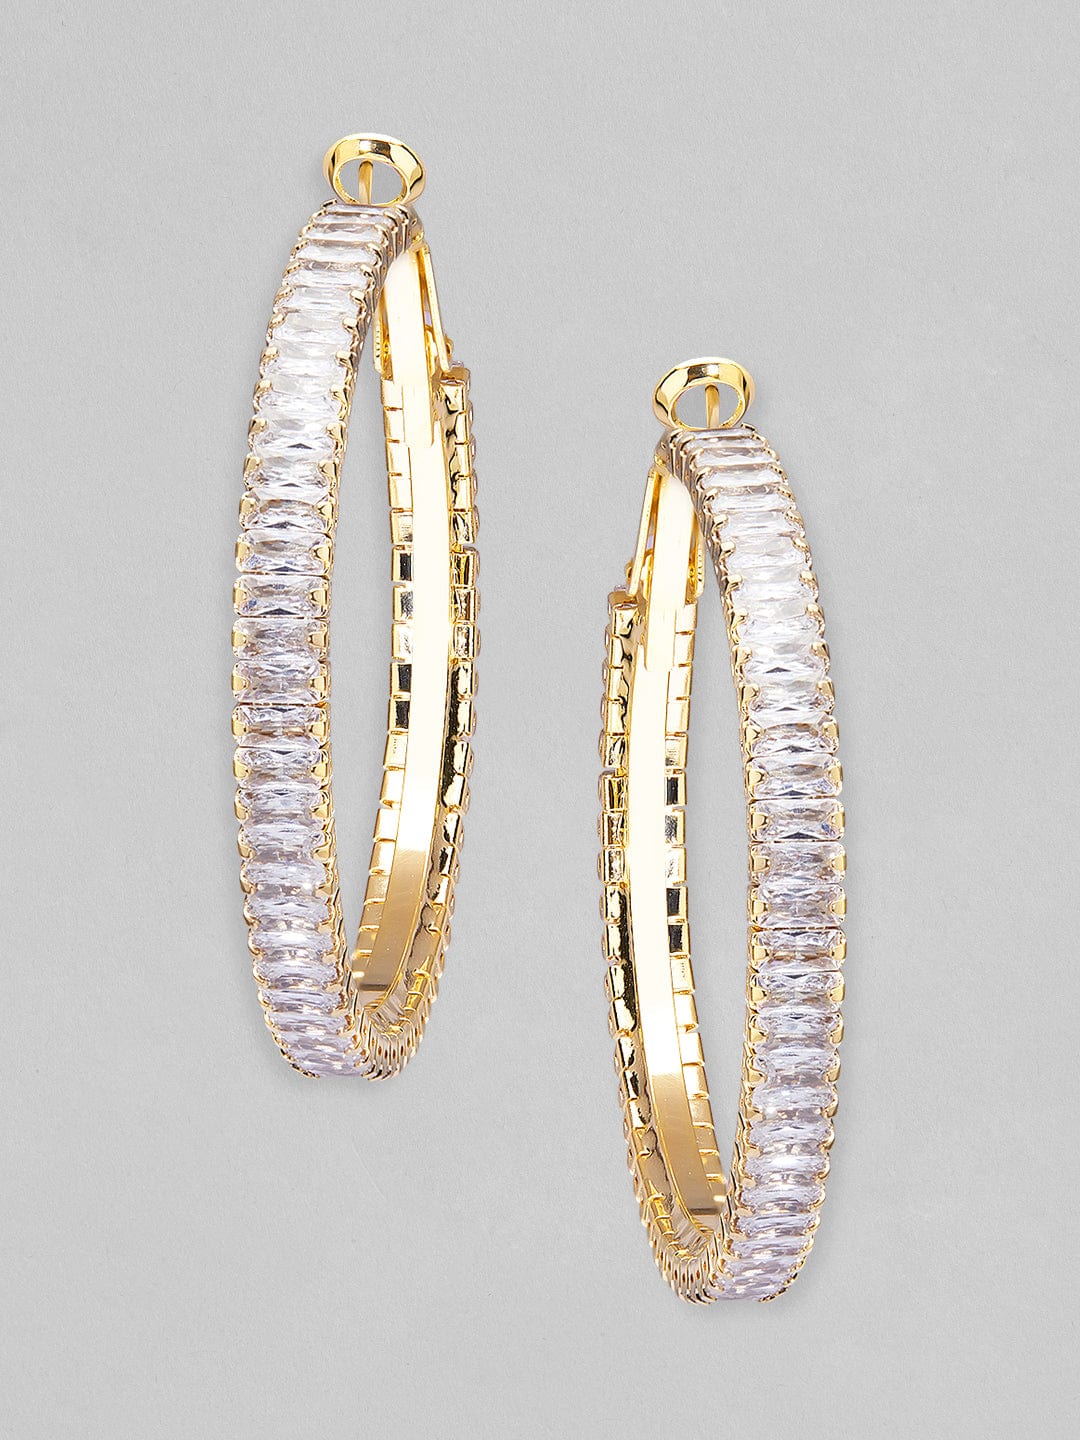 Tokyo Talkies gold Plated Long hoop Earrings Studded With American Diamonds. Earrings